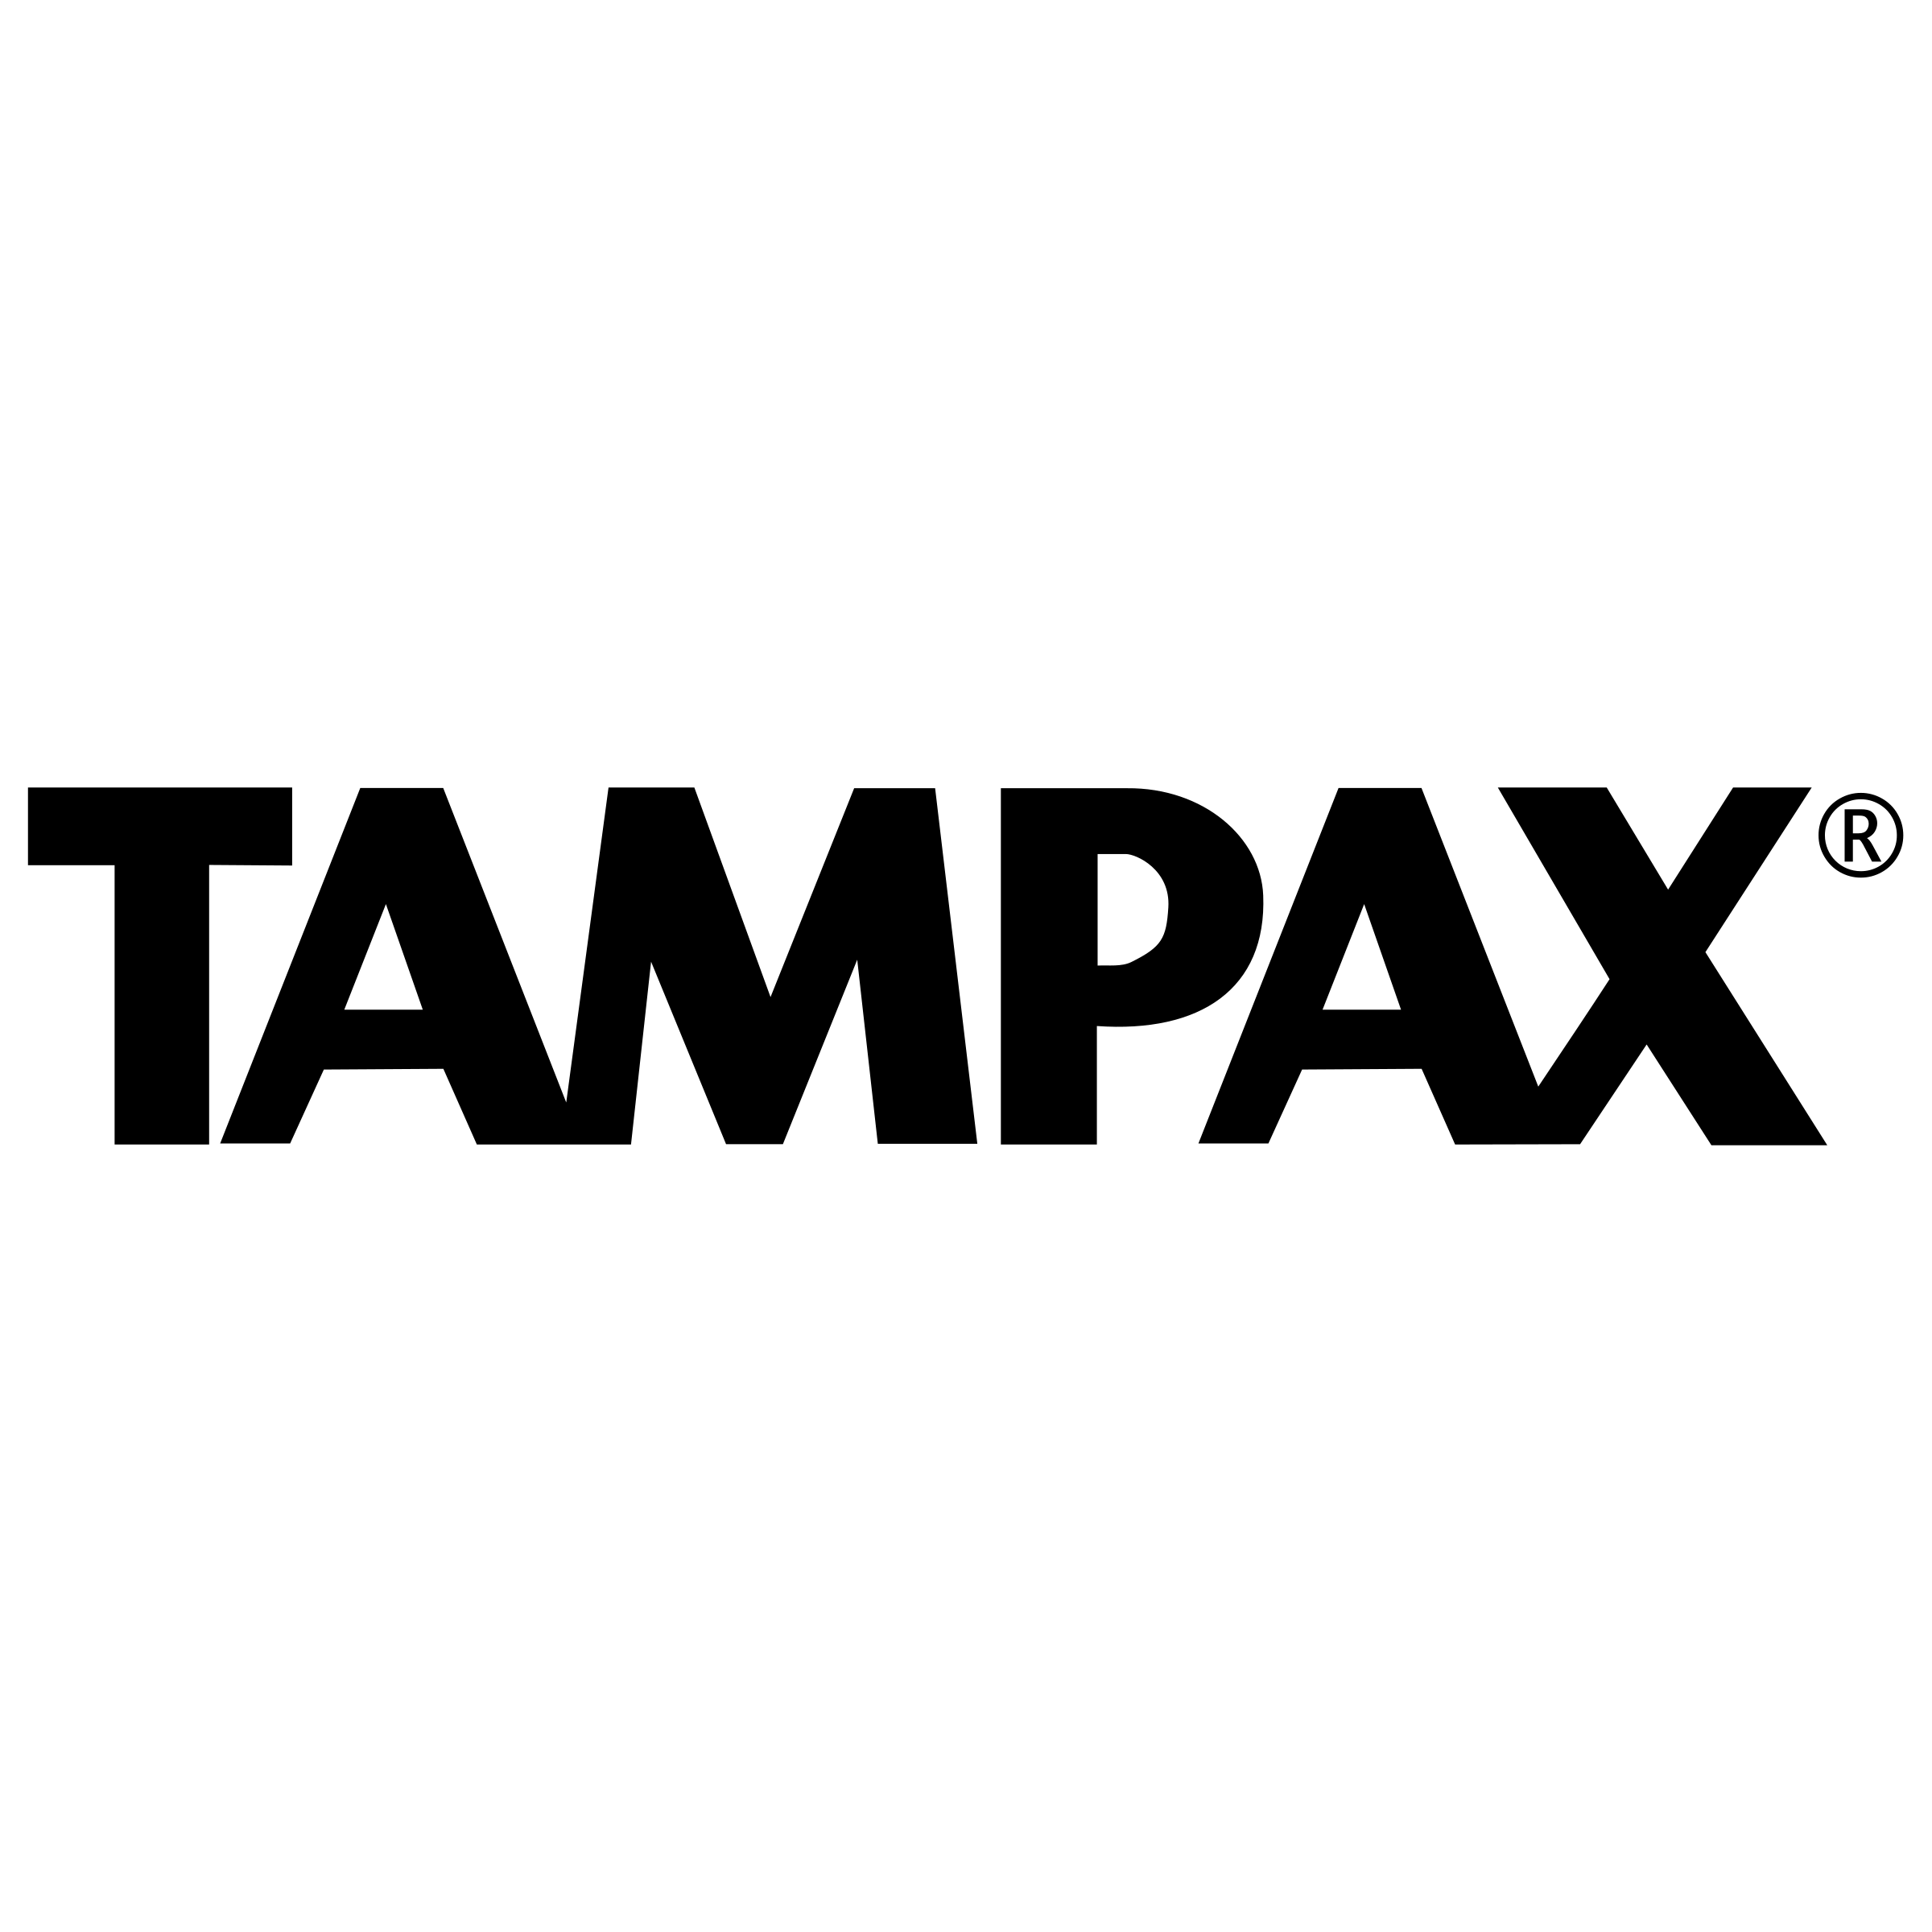 Tampax Logo - Tampax Logo PNG Transparent & SVG Vector - Freebie Supply